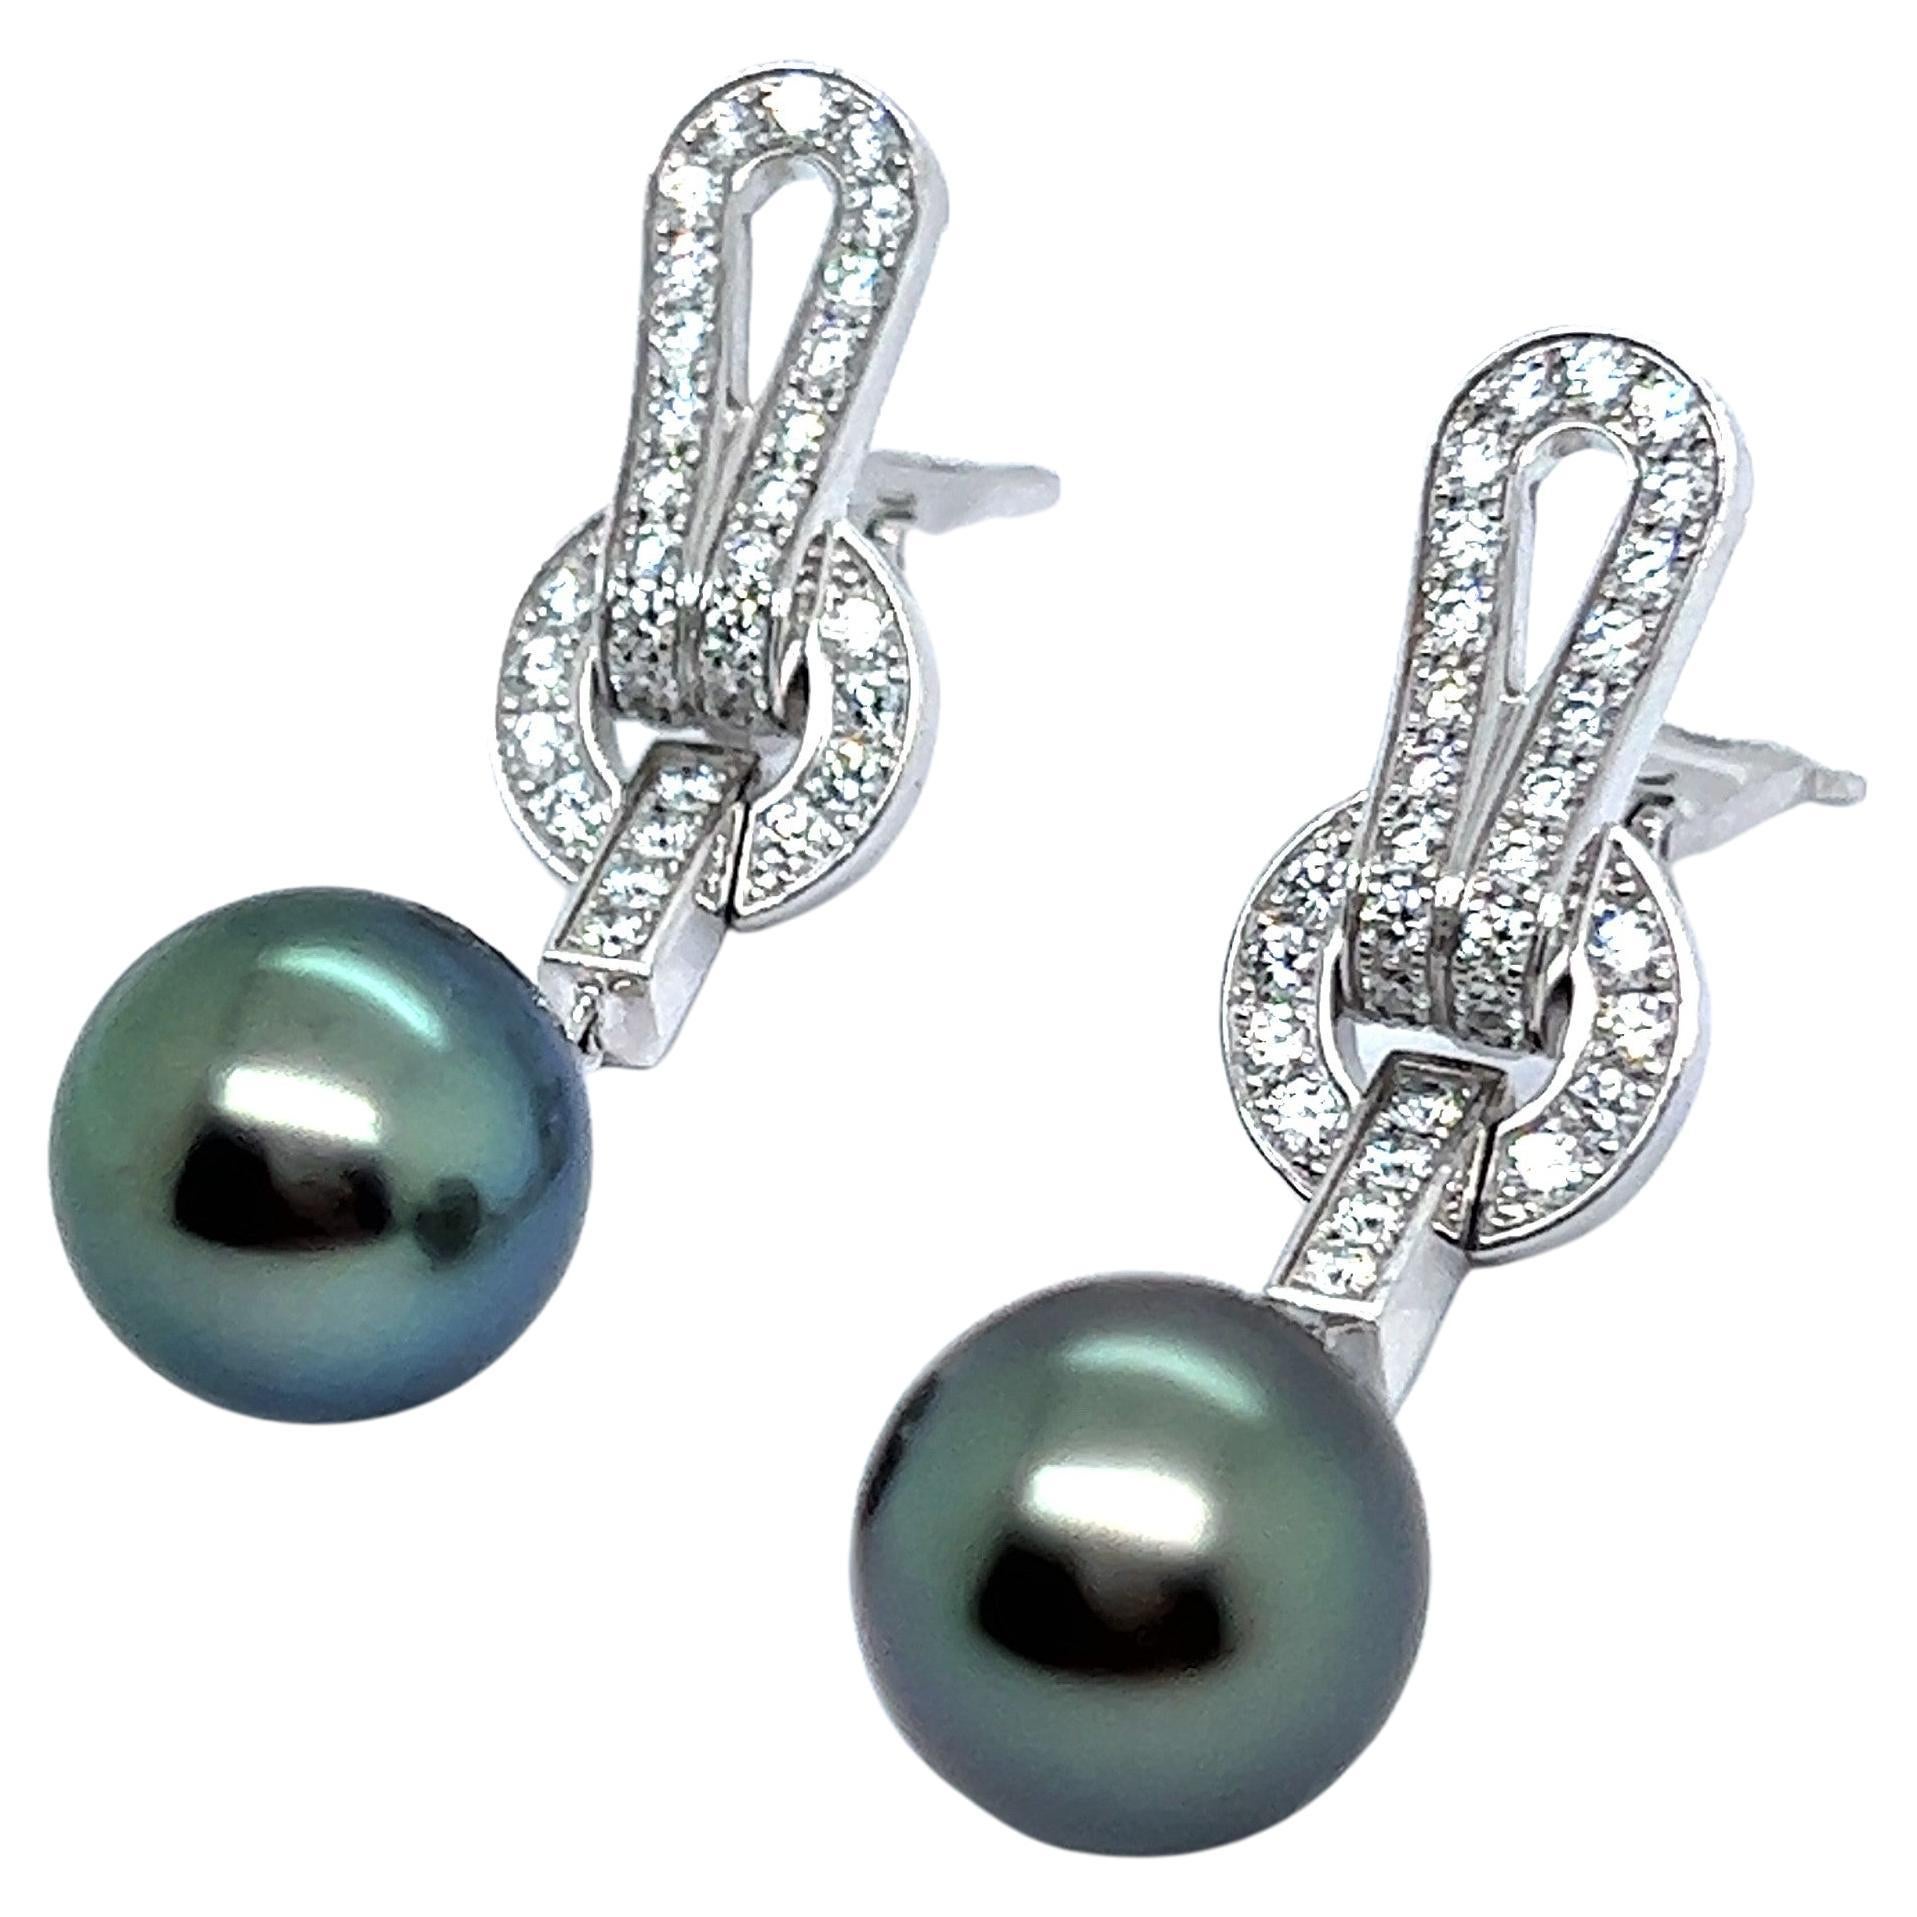 Cartier Himalia Pearl and Diamond Earrings in 18 Karat White Gold